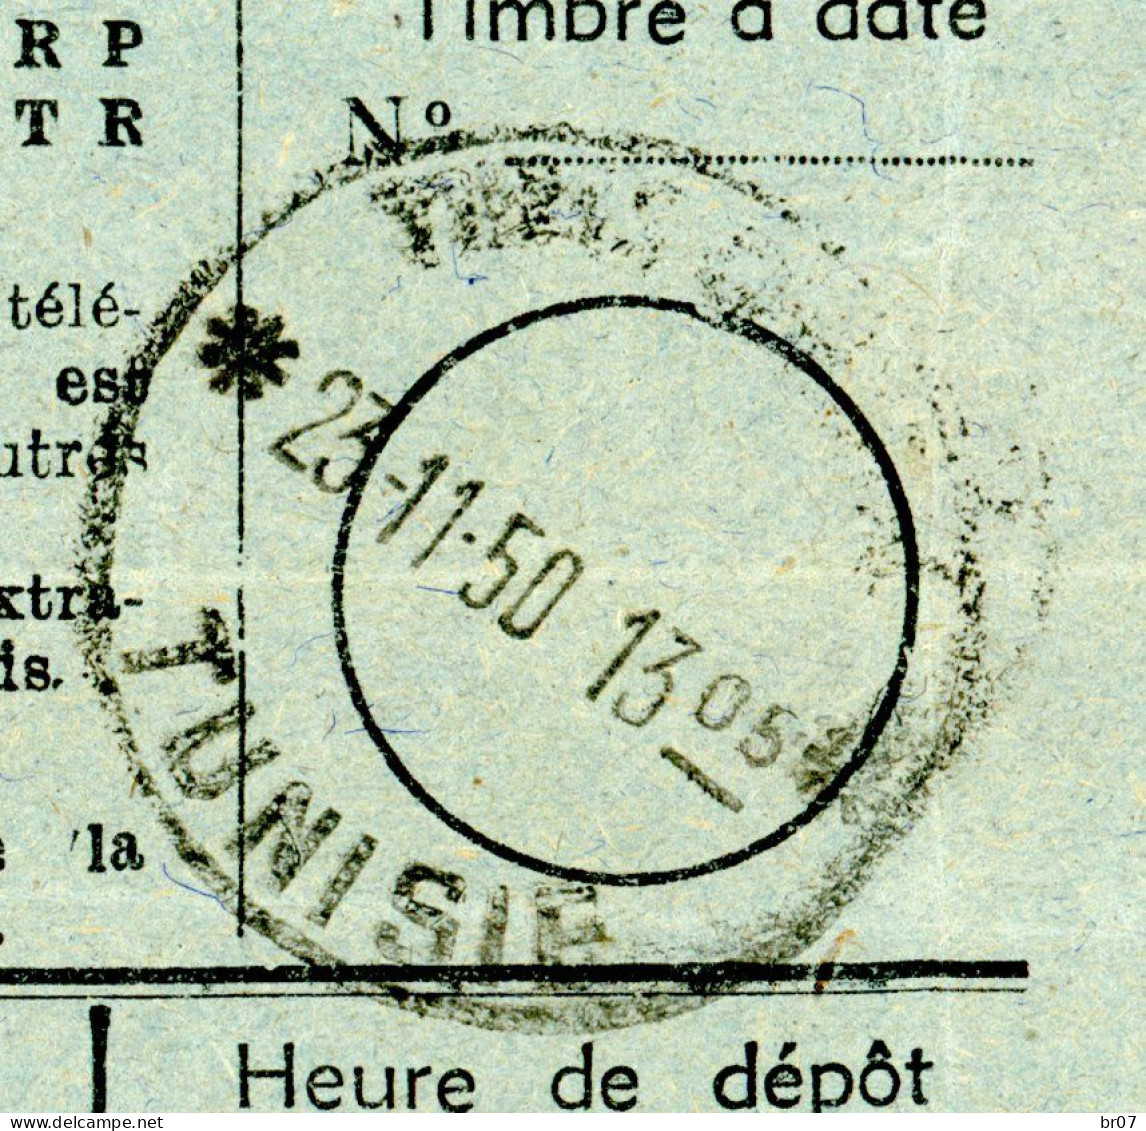 TUNISIE TELEGRAMME DE CONSTANTINE 1950 TUNIS CENTRAL - Covers & Documents